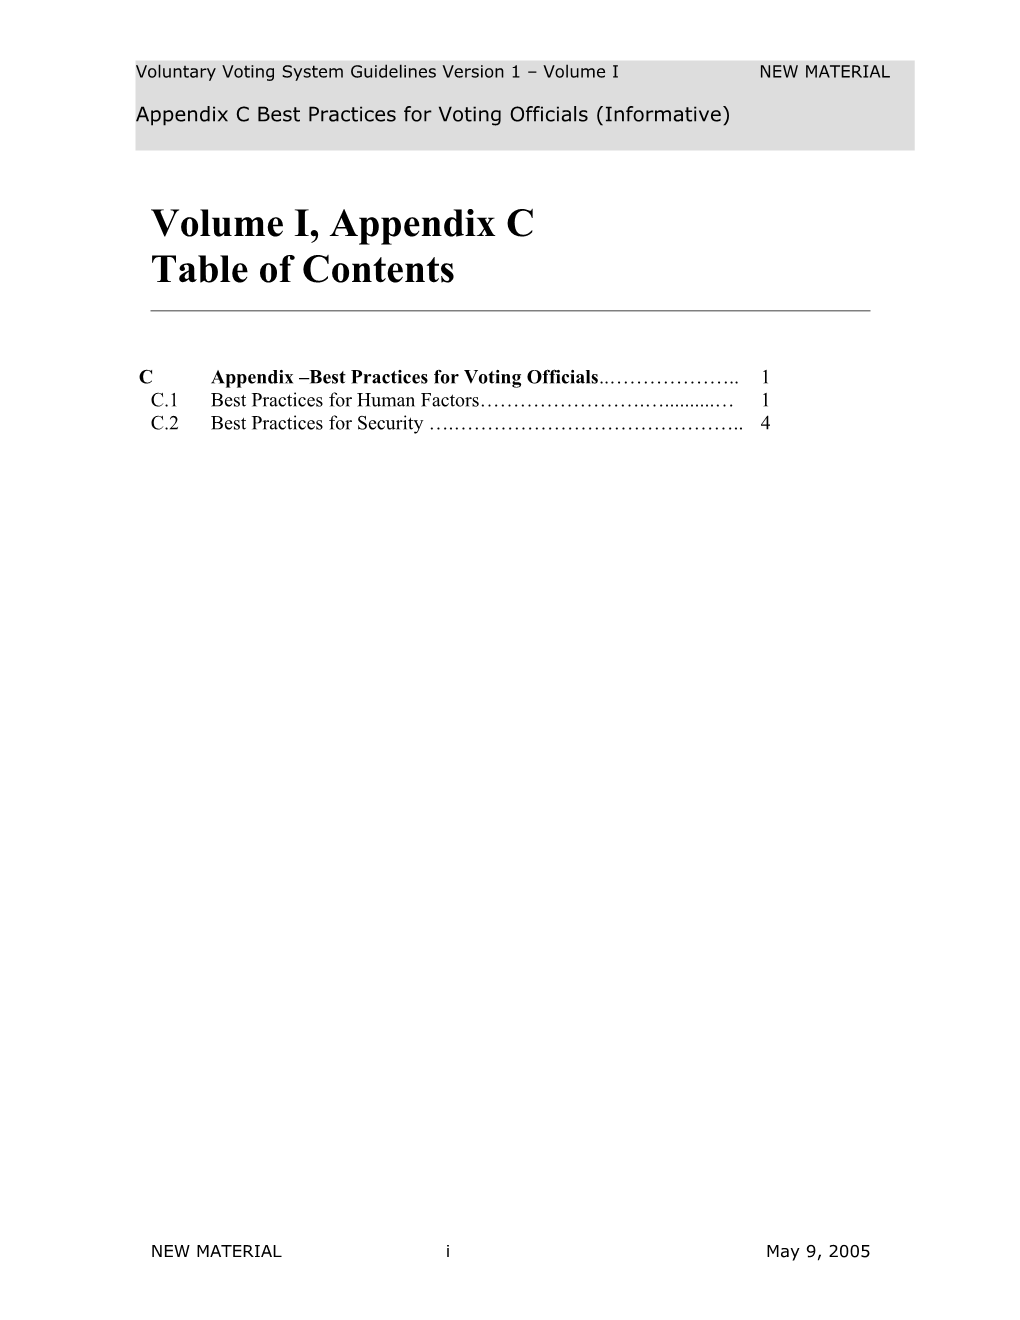 Volume I, Appendix C